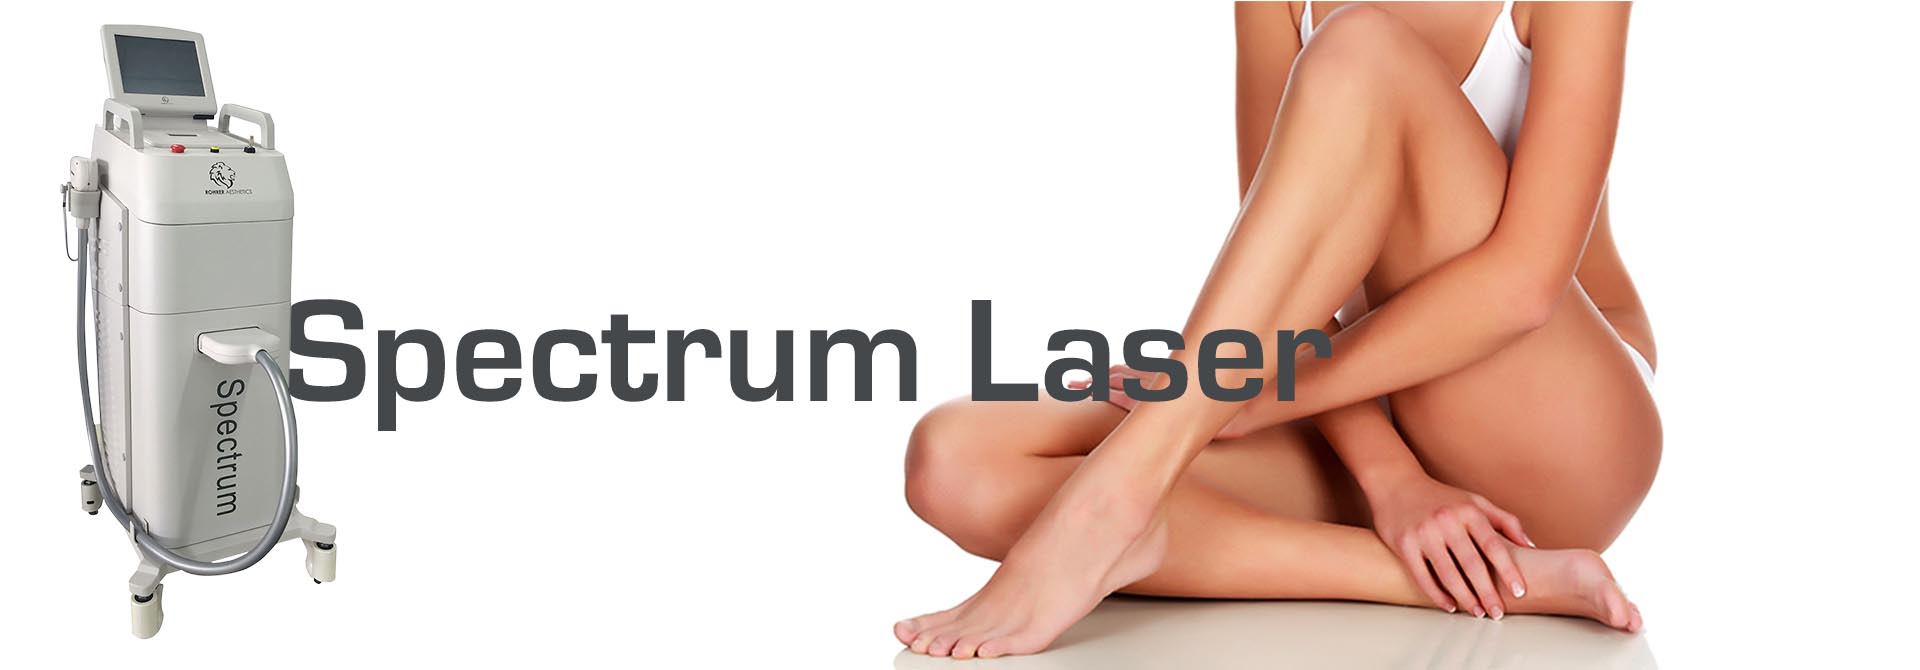 Spectrum Laser | Laser hair removal technology